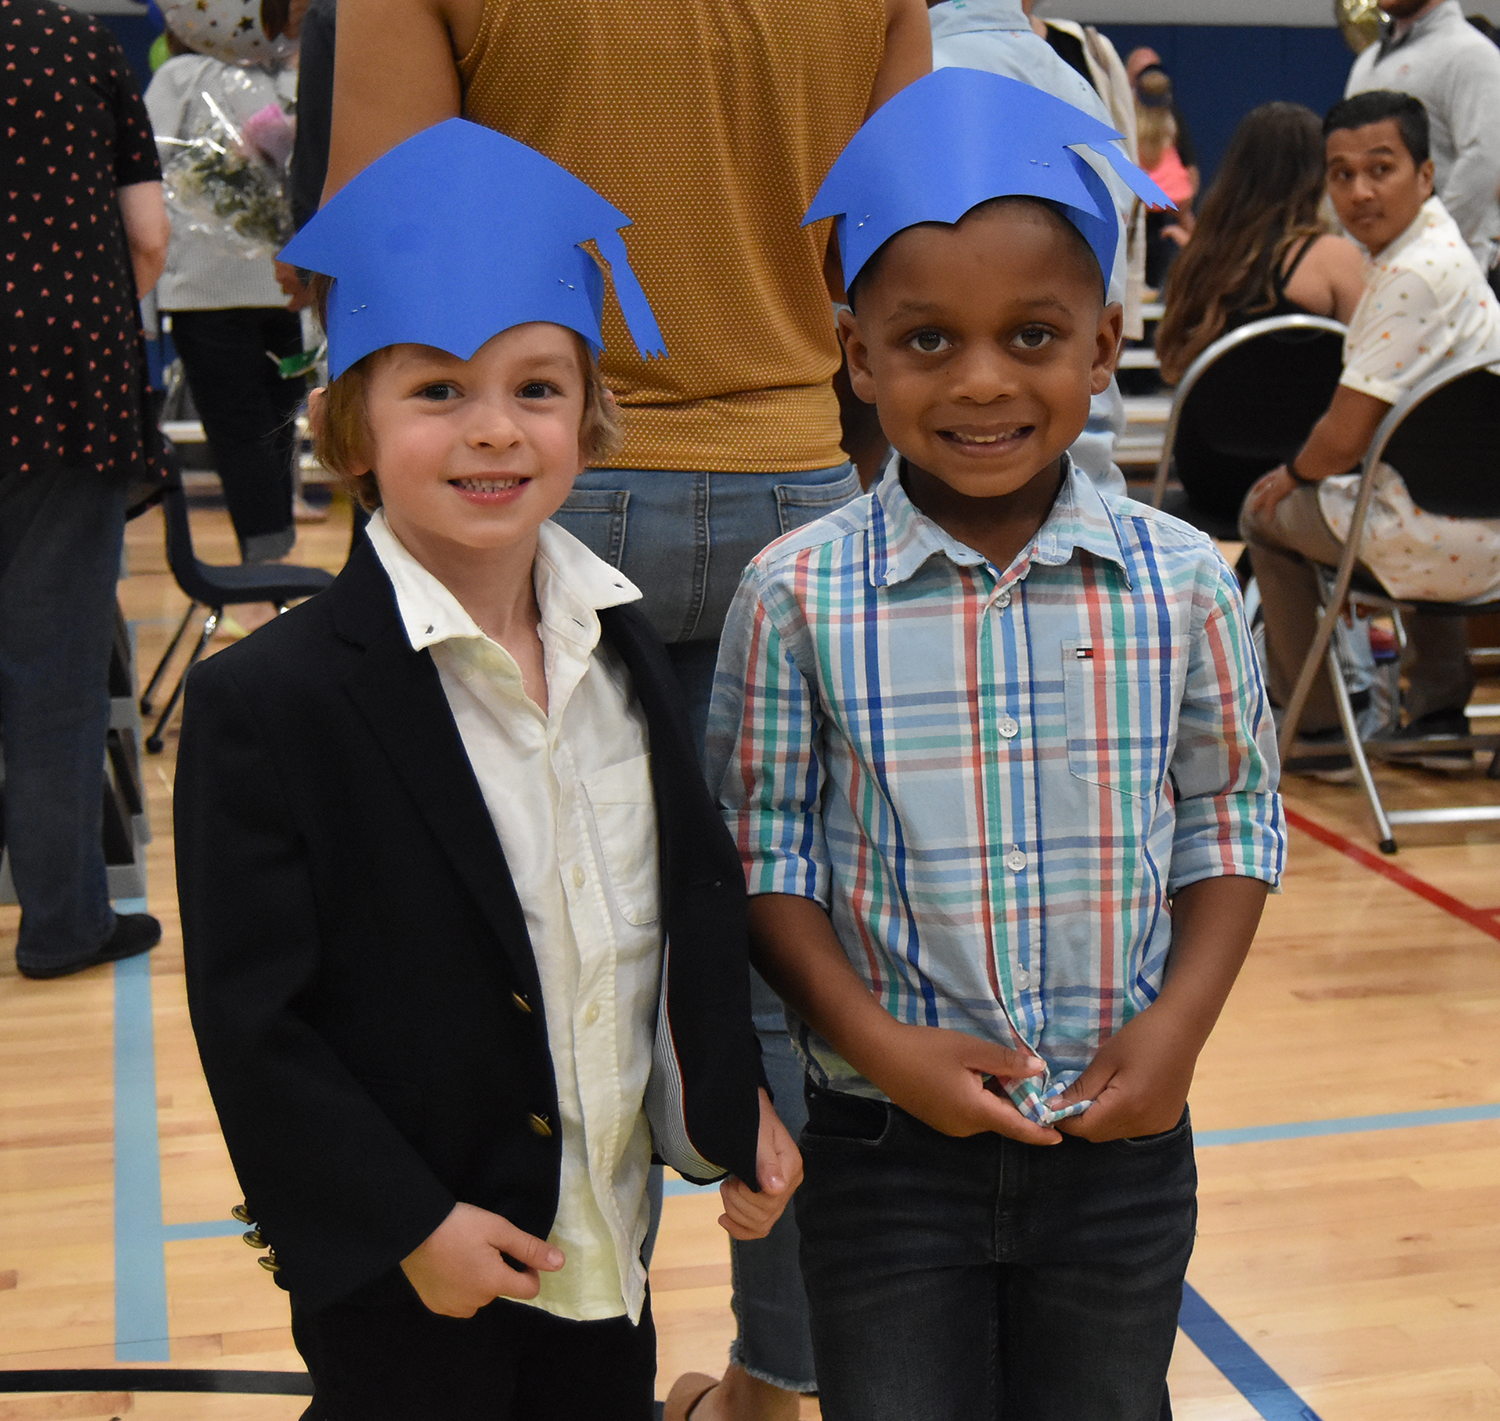 Two boys graduating from preschool